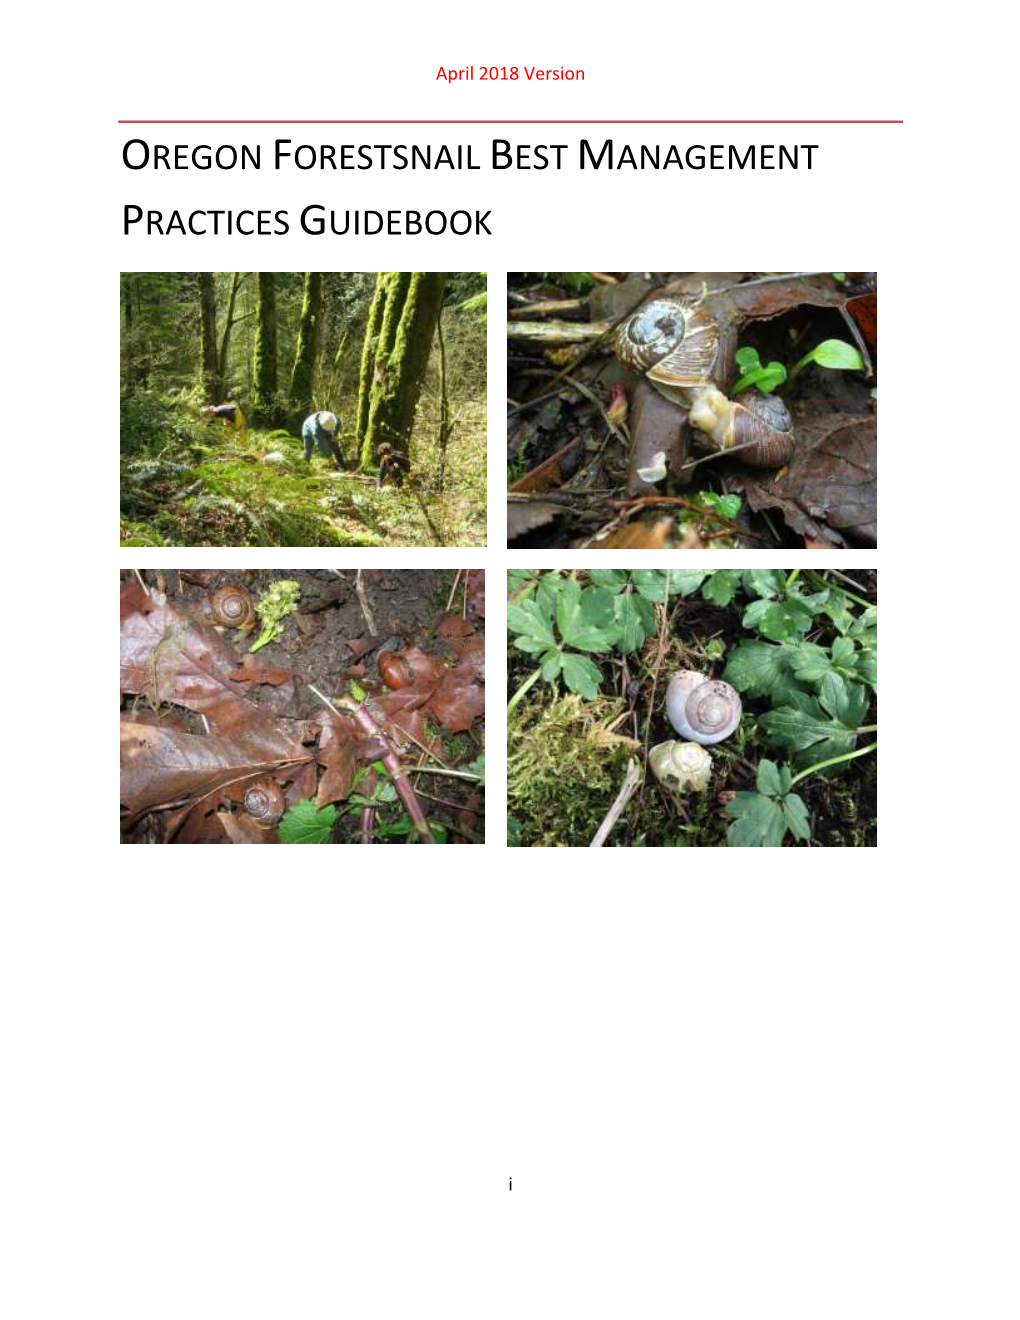 Oregon Forestsnail Best Management Practices Guidebook